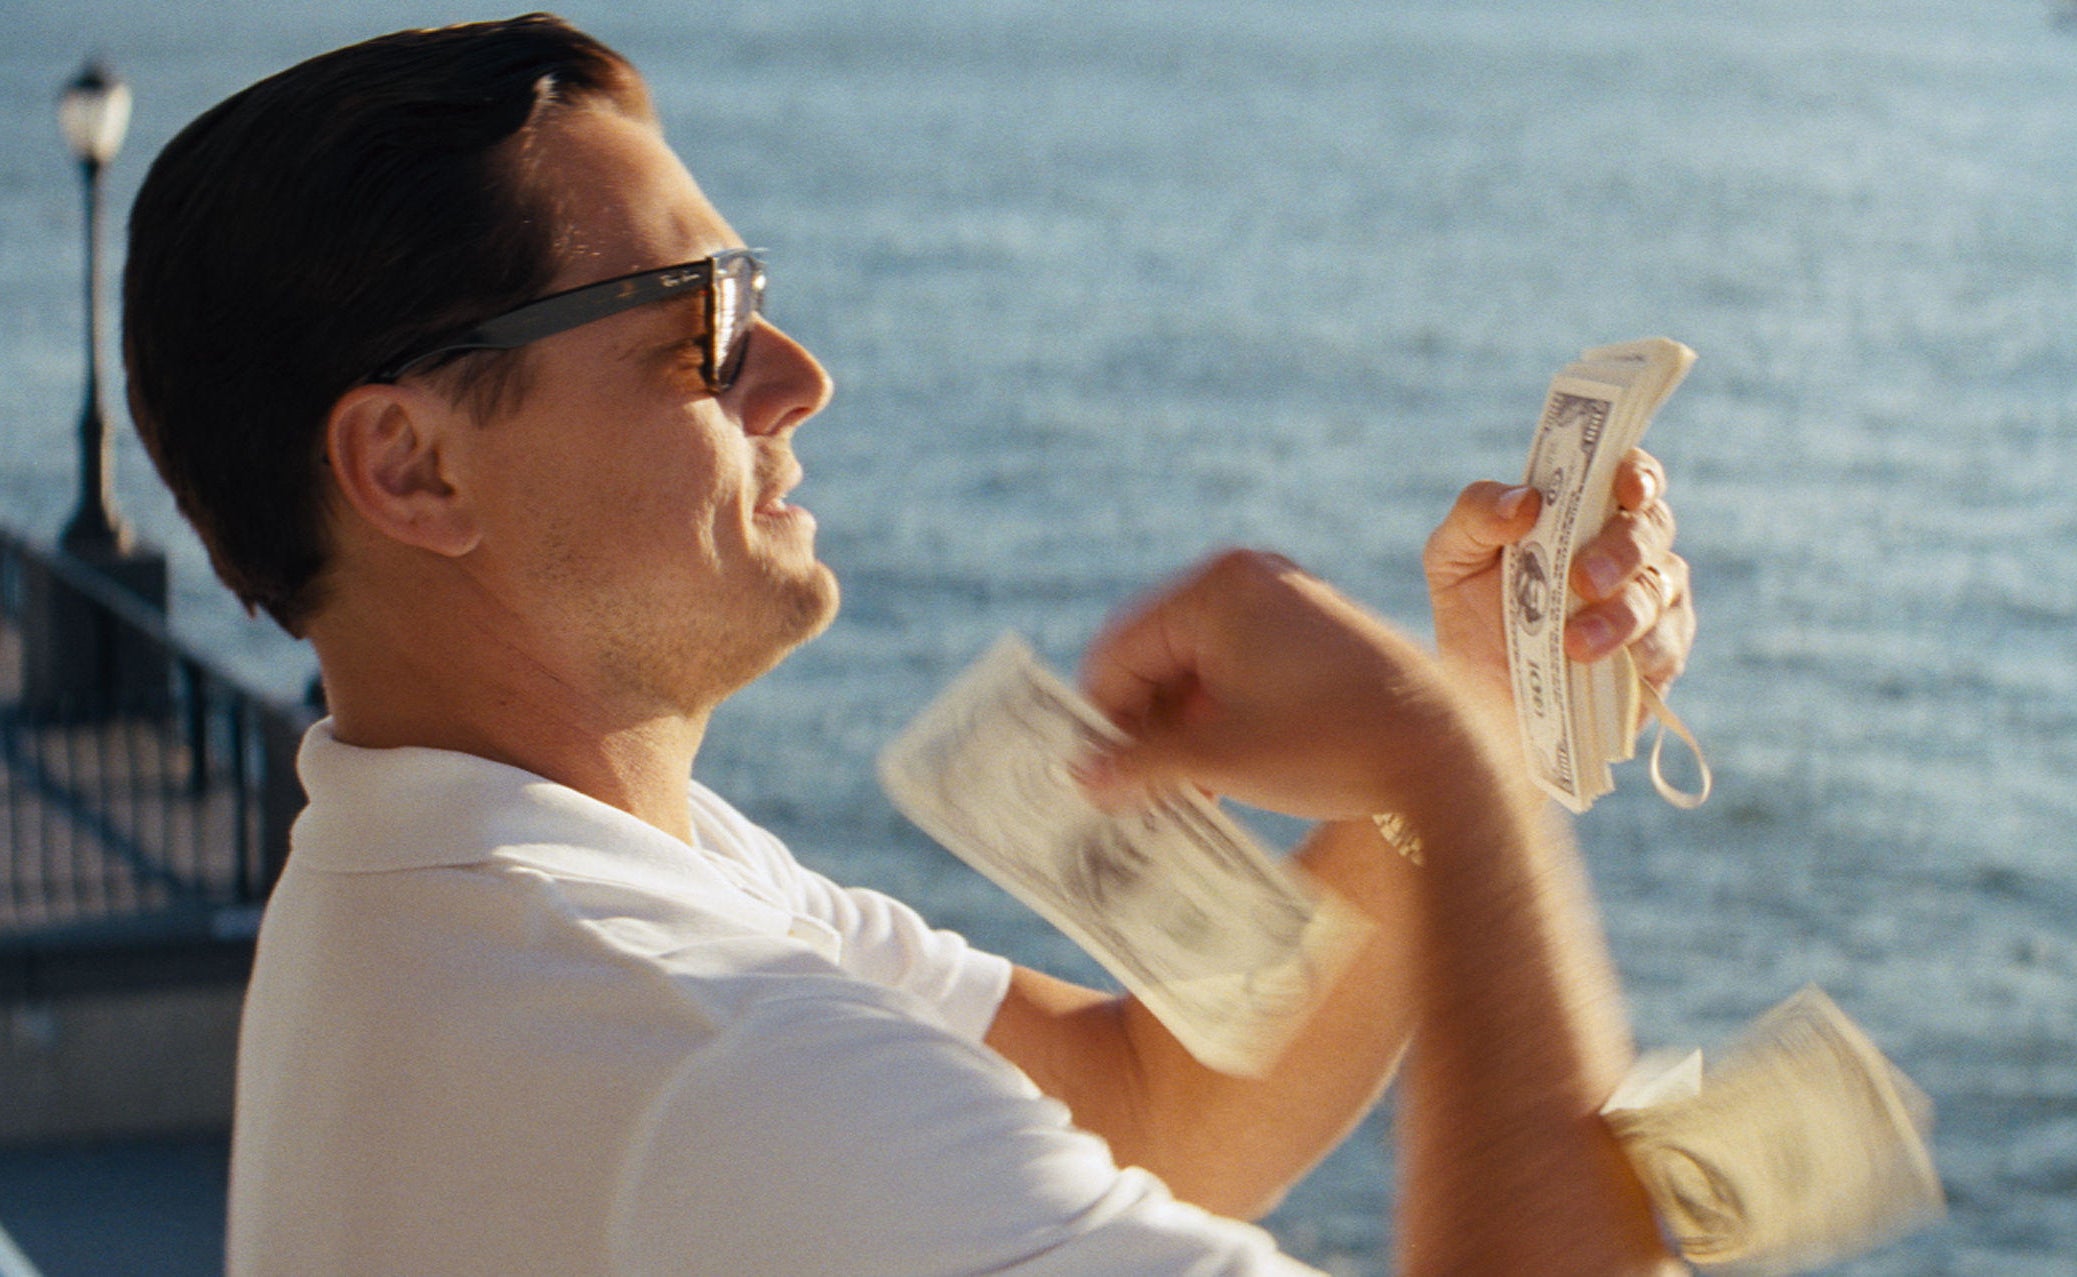 Leonardo DiCaprio throwing money around in The Wolf of Wall Street